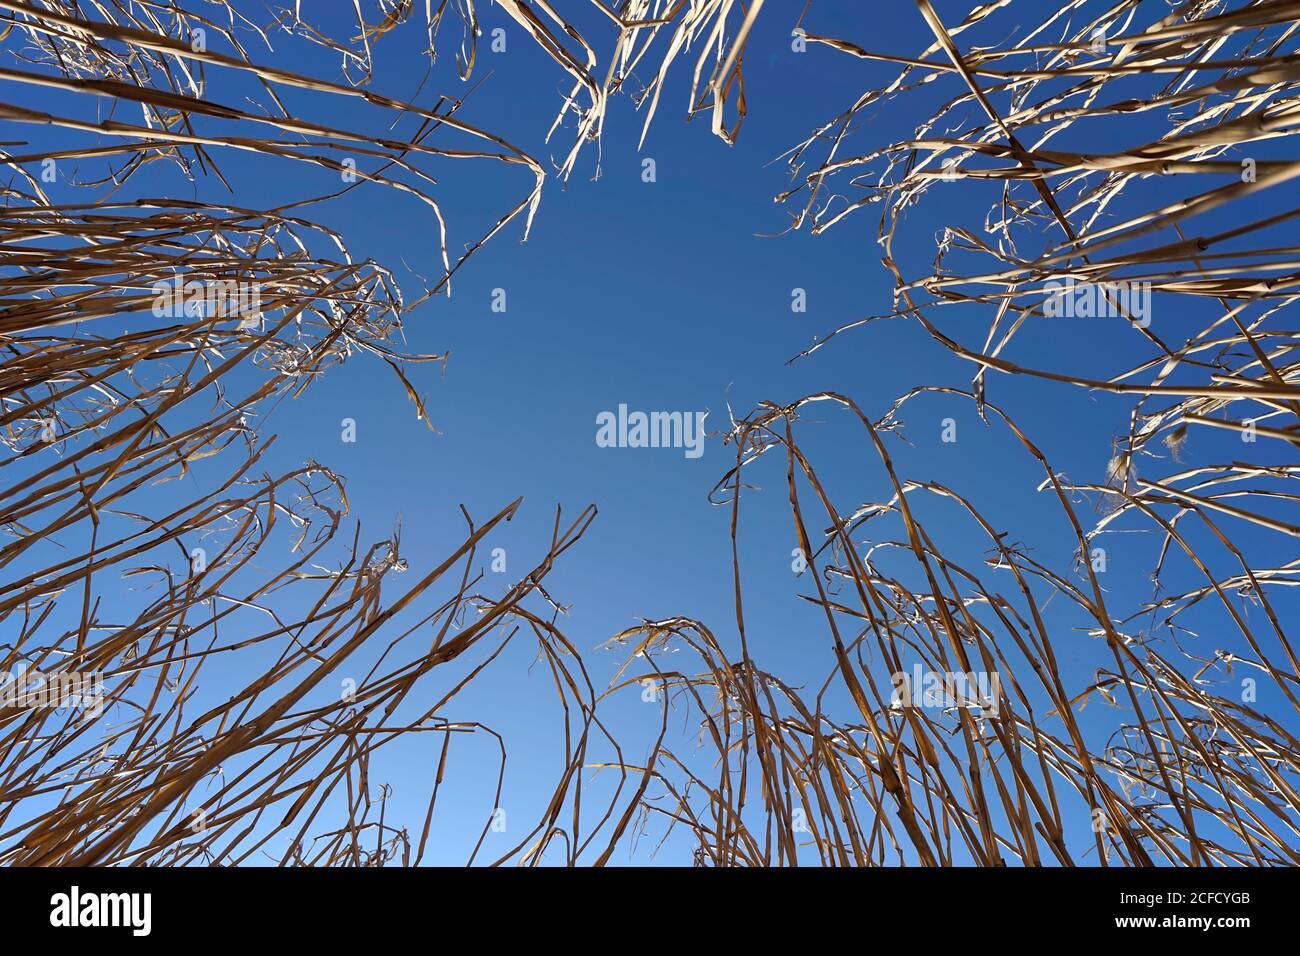 Germany, Bavaria, Upper Bavaria, Altötting district, elephant grass, giant Chinese reeds, blue sky, low angle shot Stock Photo